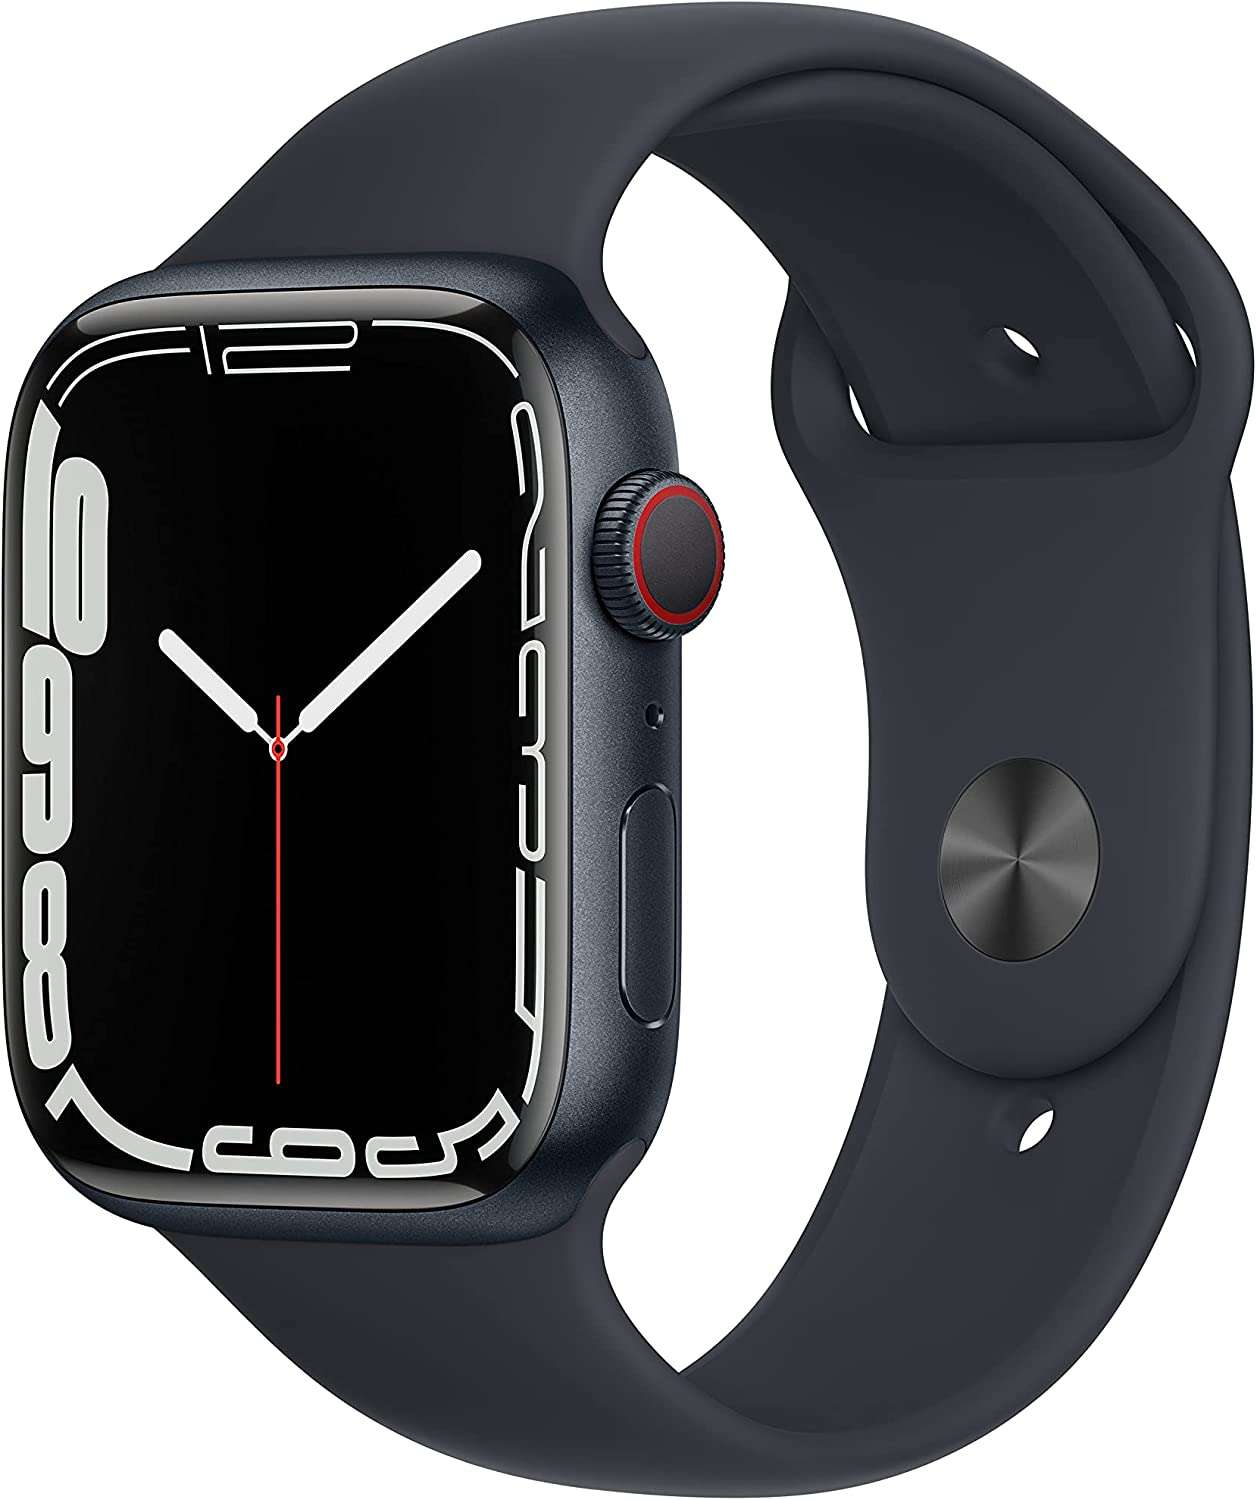 Bon plan : la montre connectée Apple Watch Series 7 © Amazon